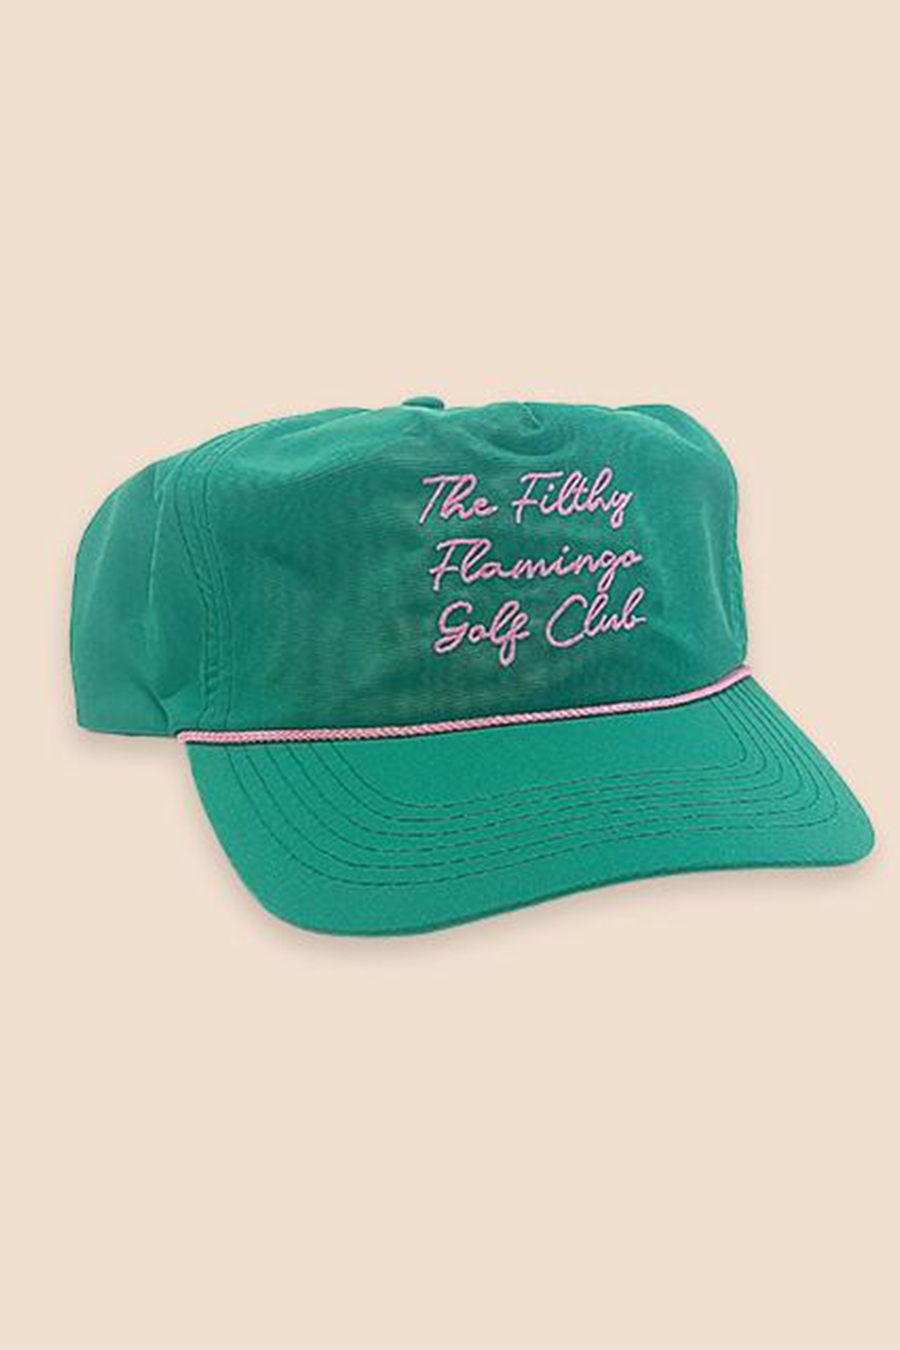 Flamingo Golf Club Hat | Seafoam - Main Image Number 1 of 1